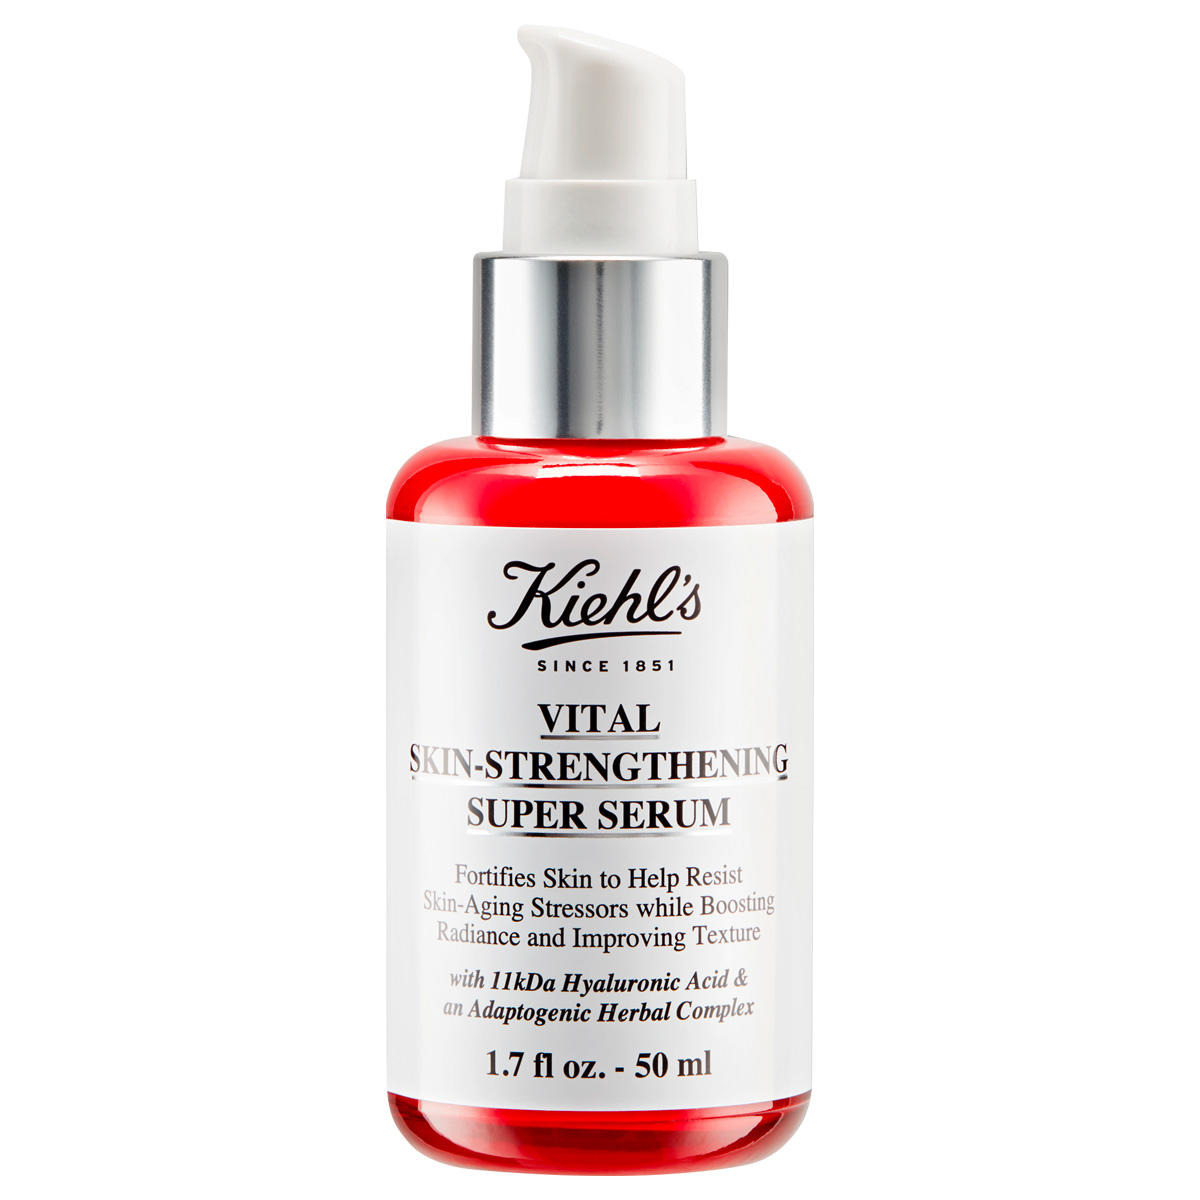 Kiehl's Vital Skin-Strengthening Super Serum  - 1